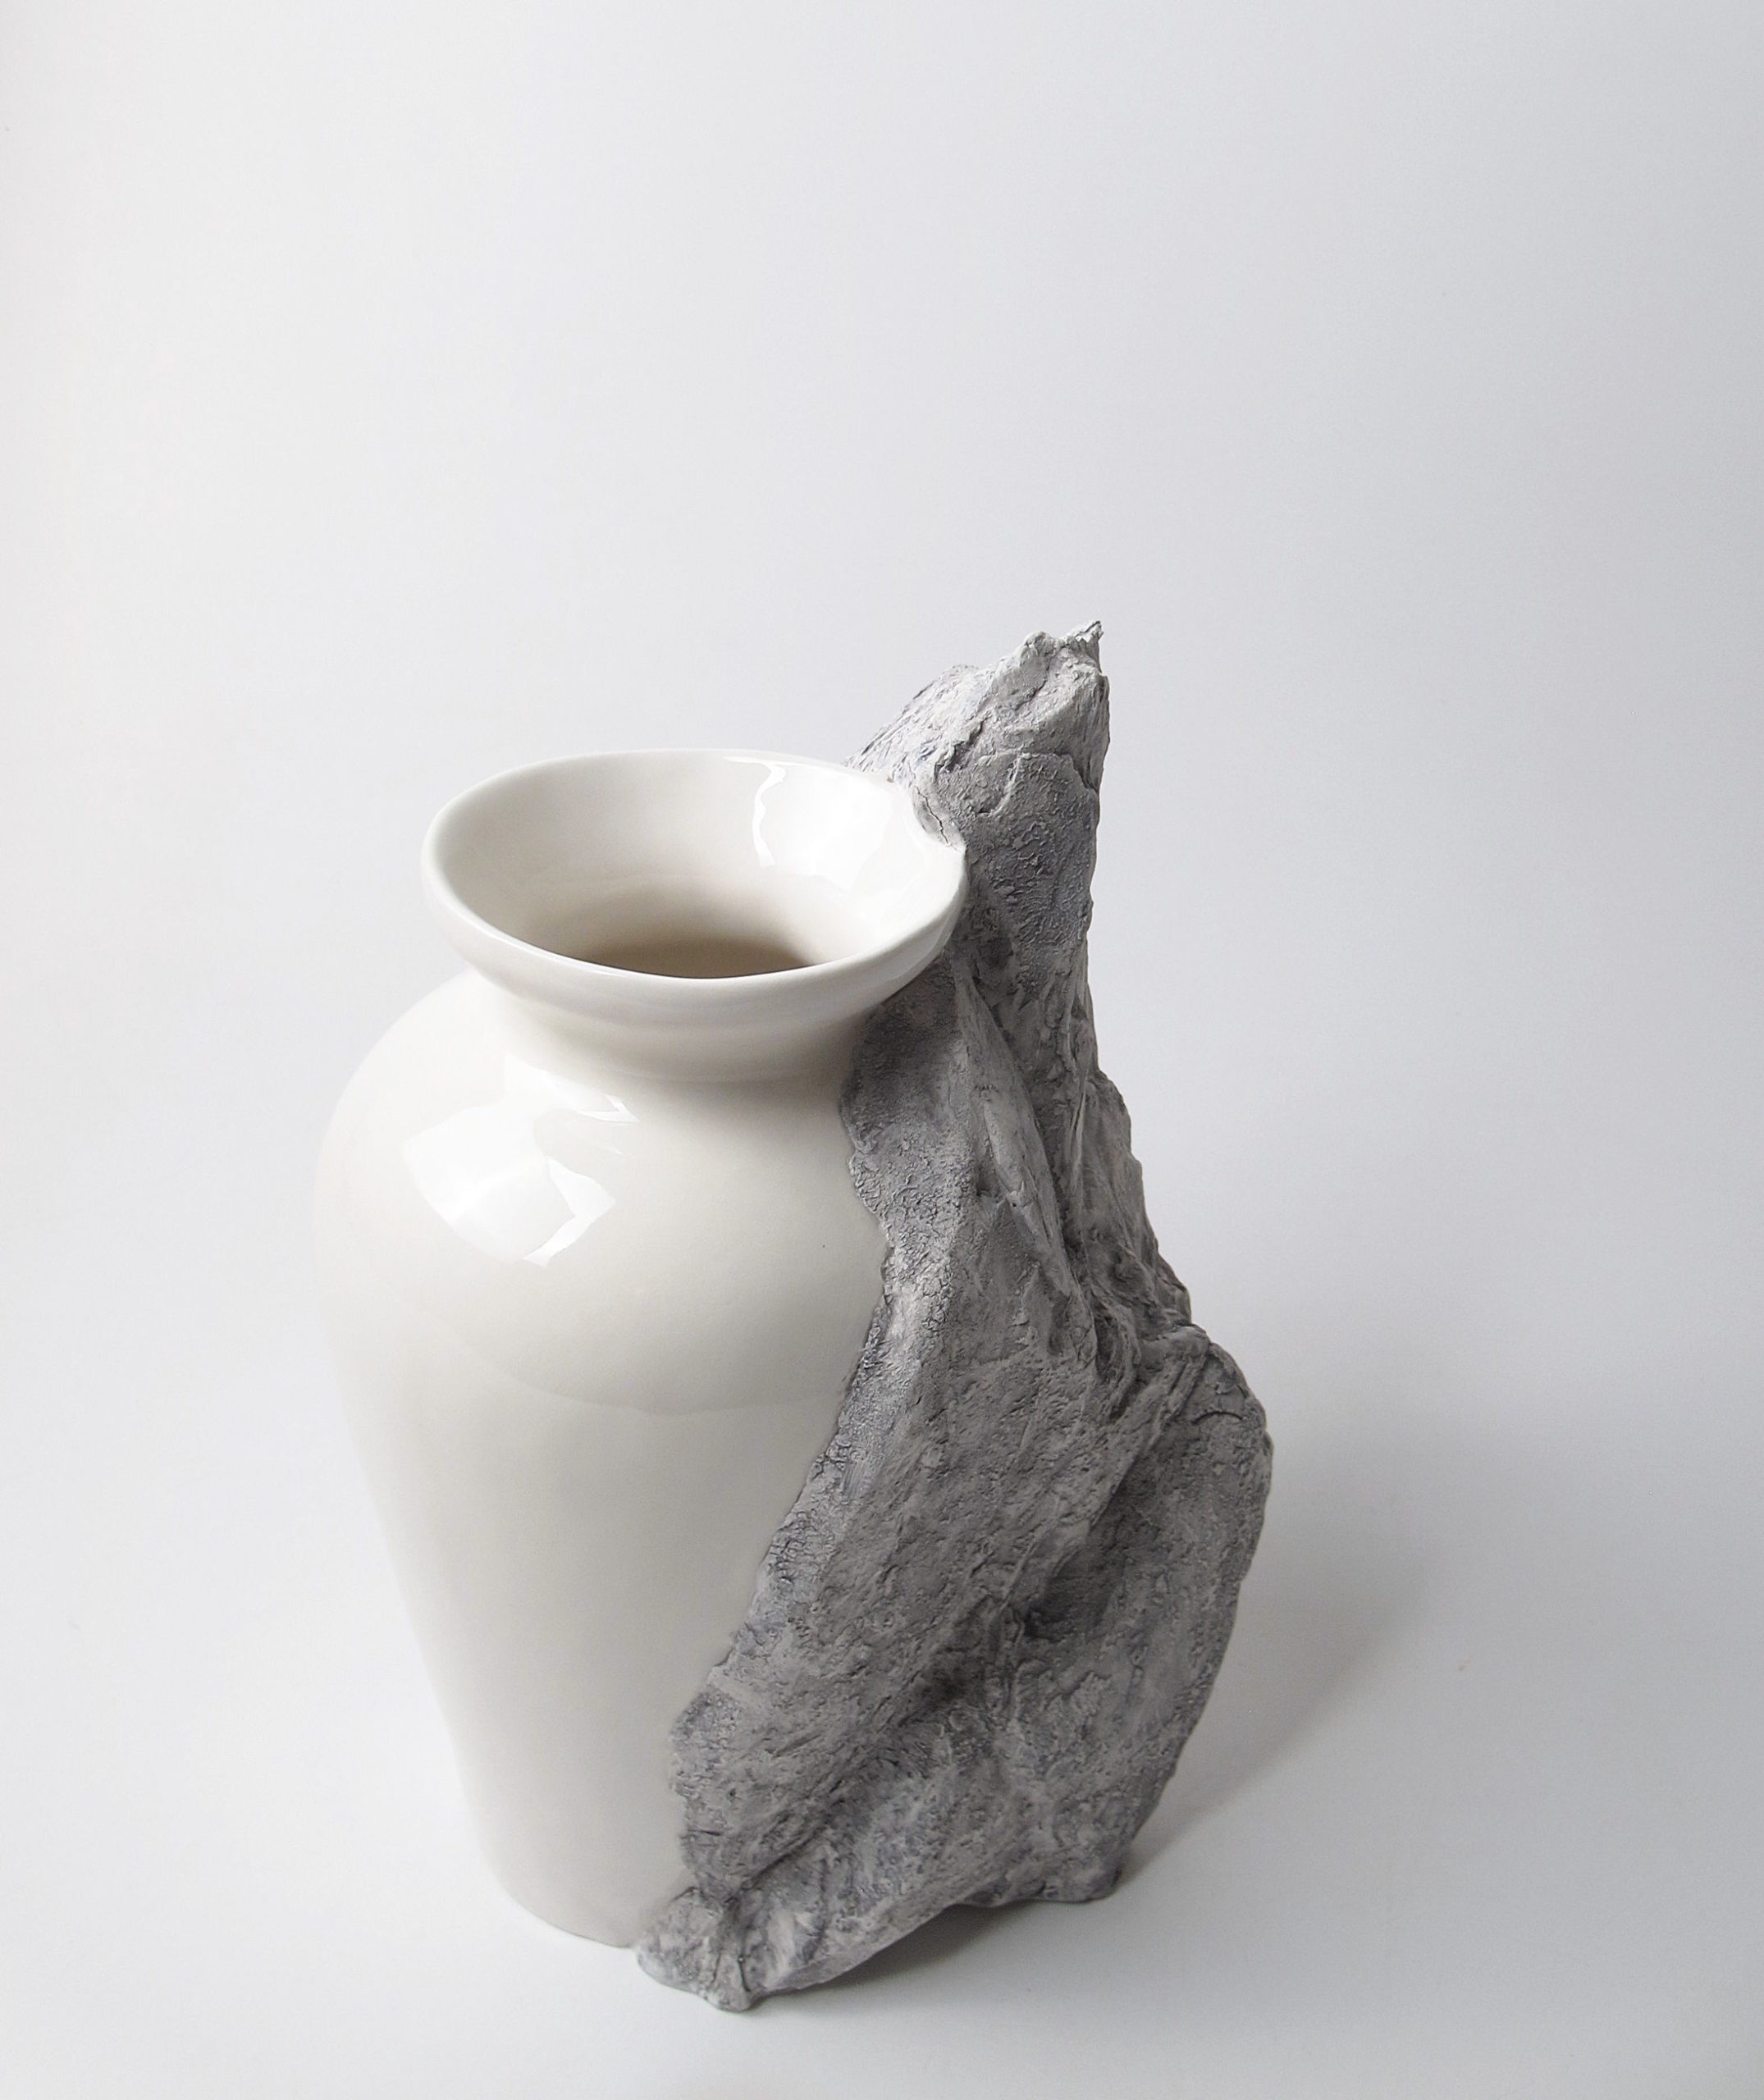 lapidaria vase, an artistic project by Caterina Sbrana and Gabriele Mallegni, Studio17